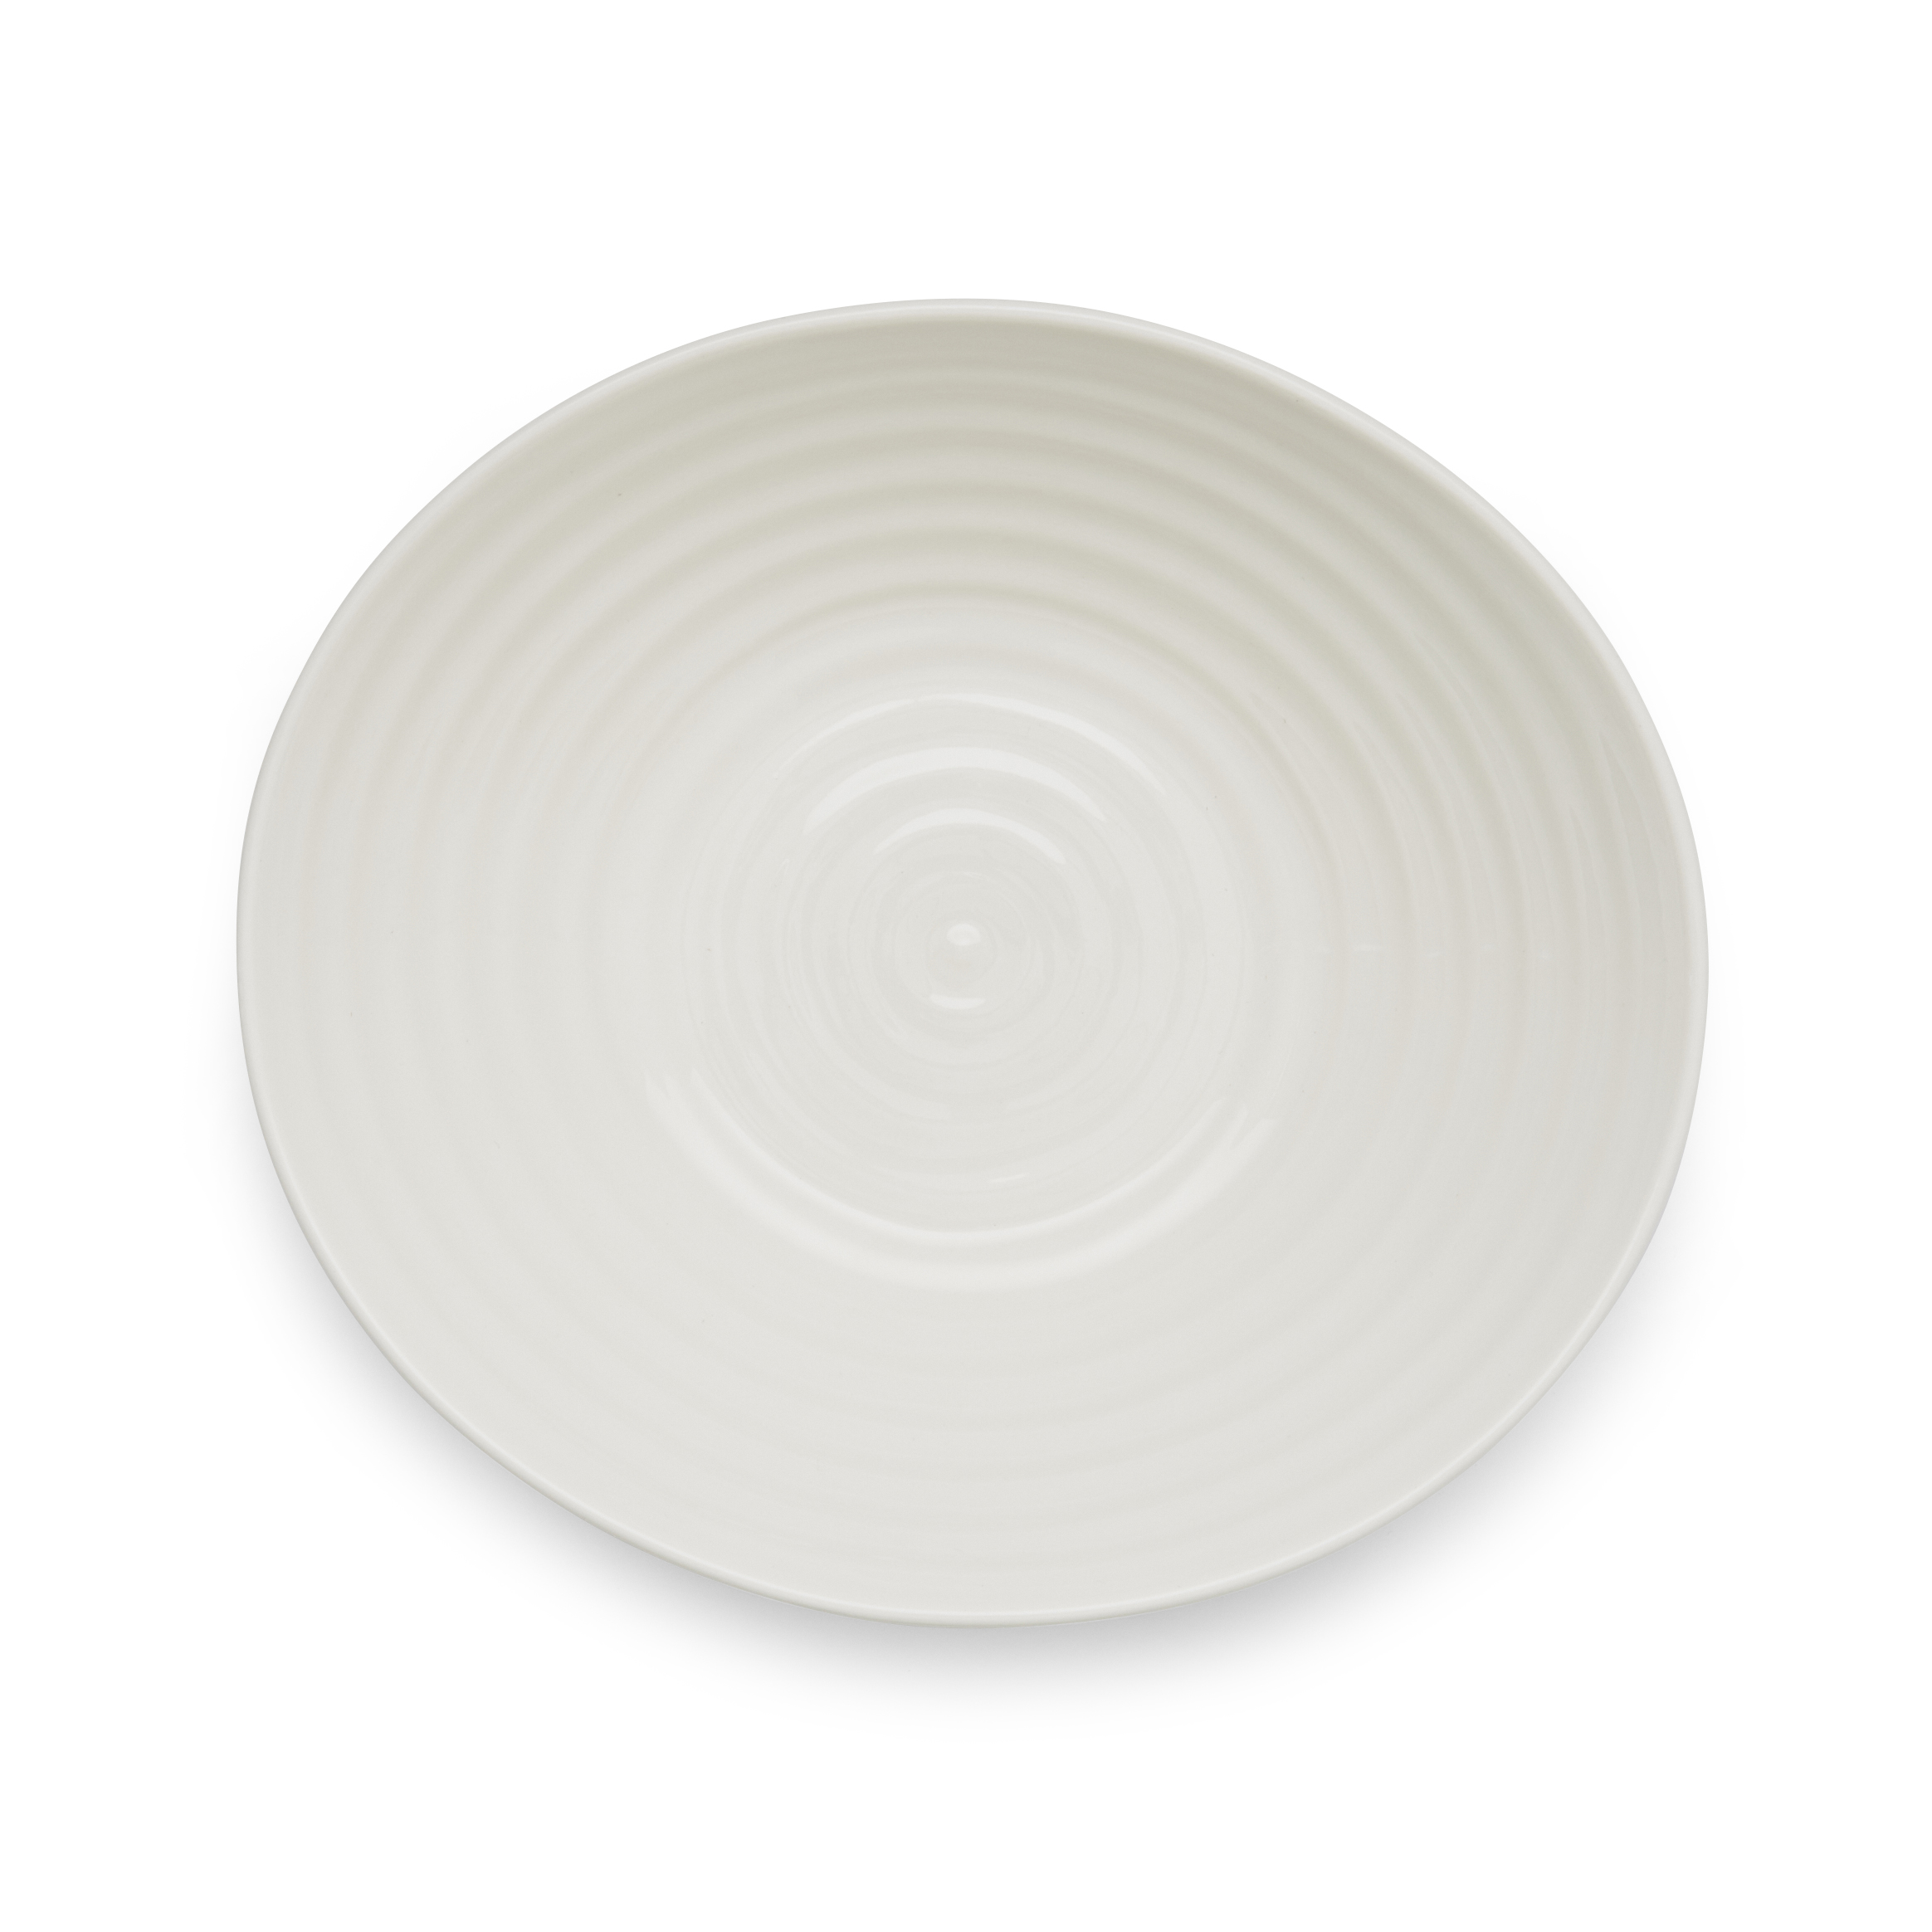 Sophie Conran Set of 4 Cereal Bowls, White image number null